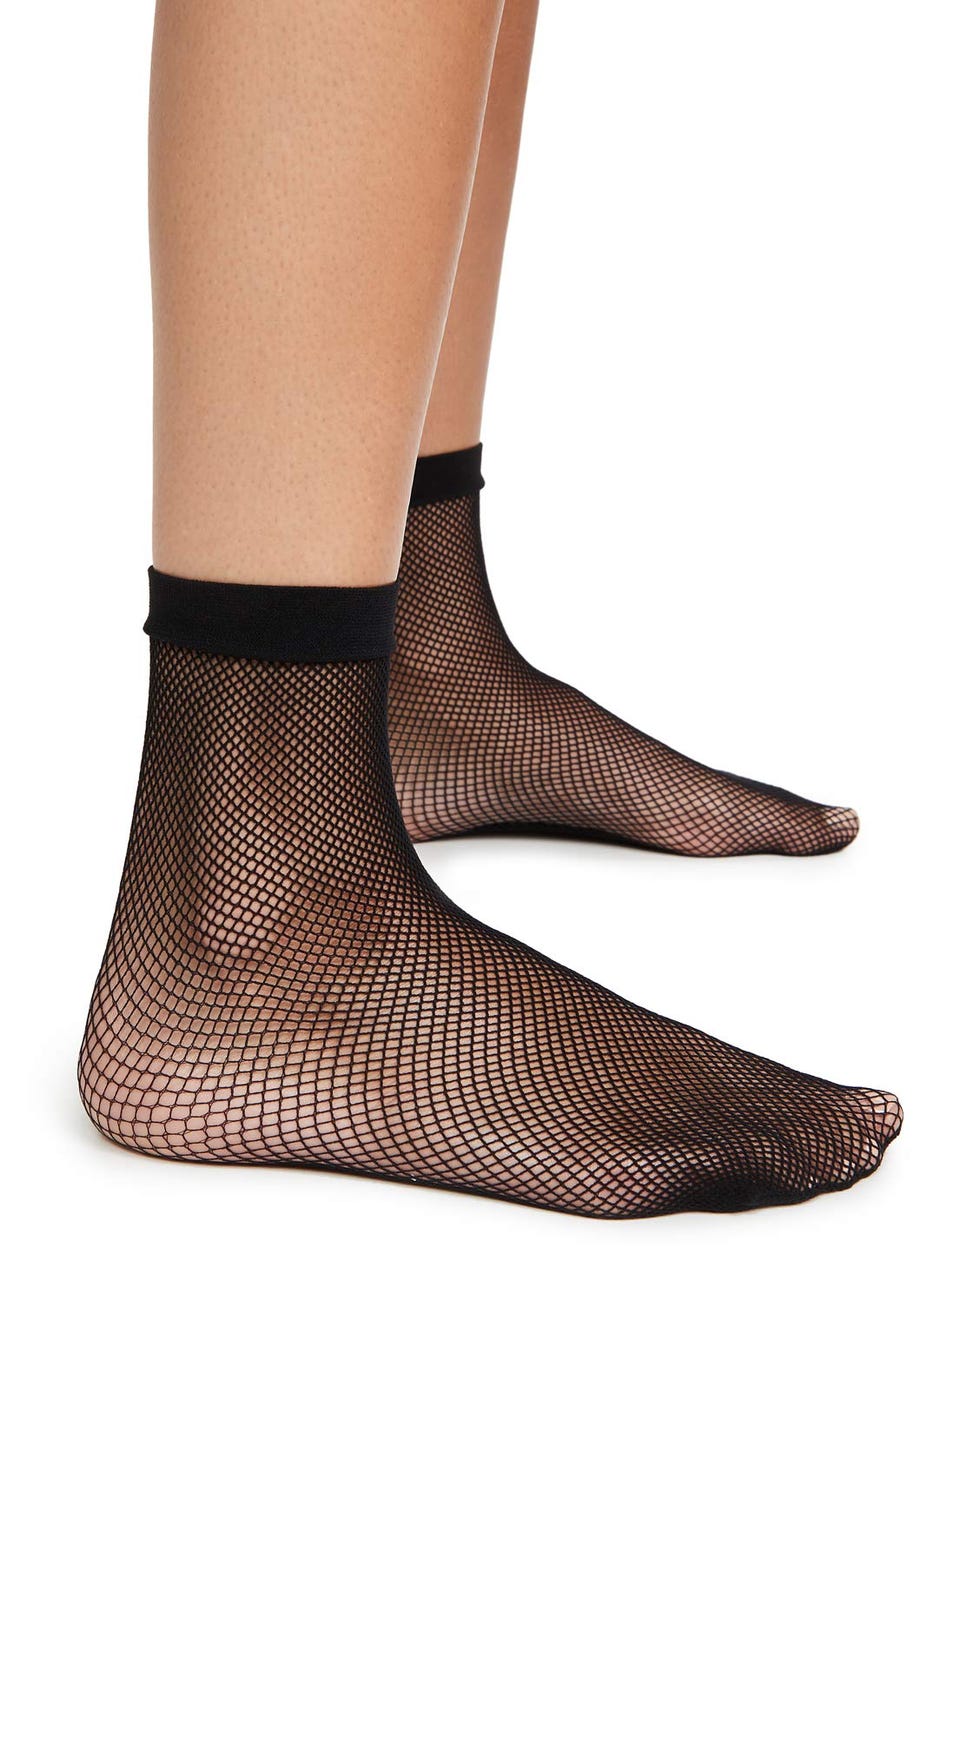 Micro Fishnet Sneaker Socks